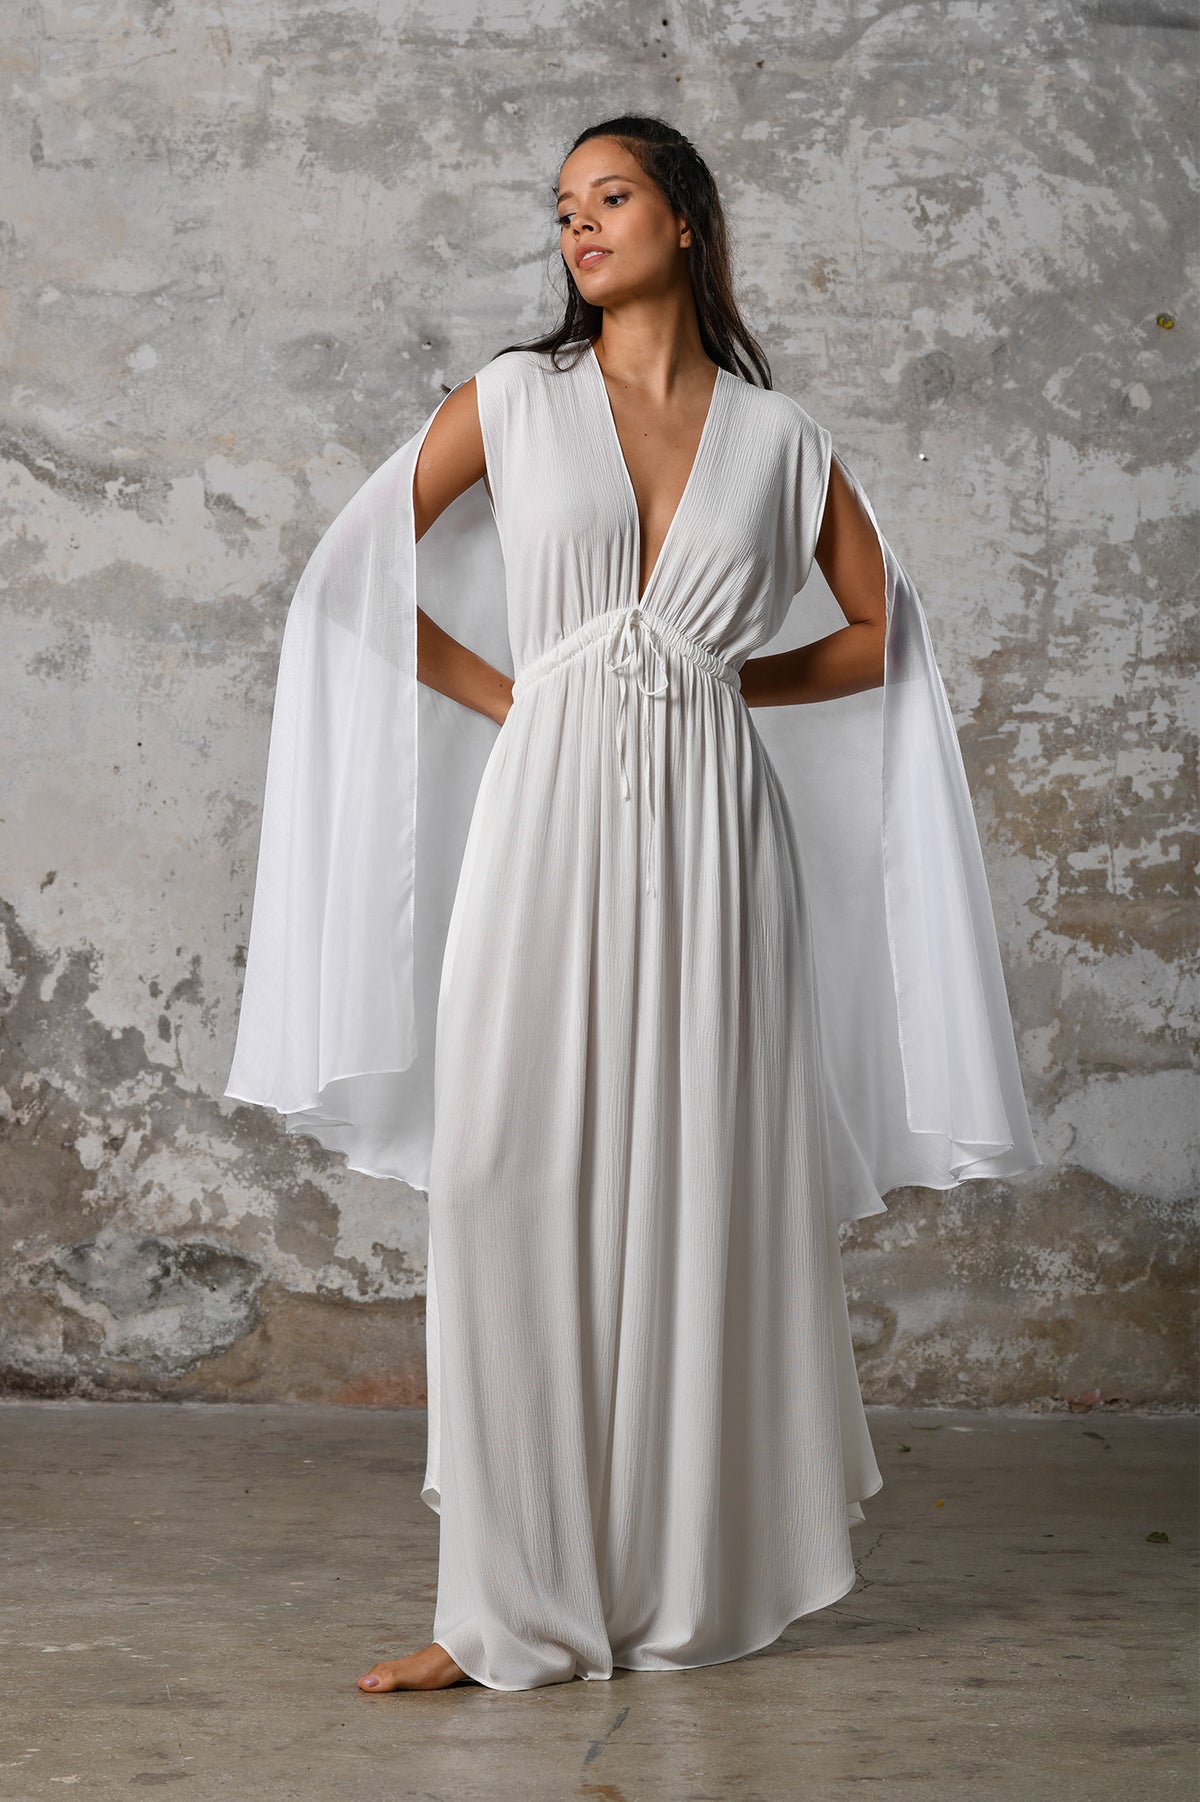 Goddess Bohemian Wedding Dress, a Simple Boho Wedding Dress with an Open Back Maxi design reminiscent of a Greek Goddess. This Elegant Dress is perfect for a Boho Fairy Tale wedding.